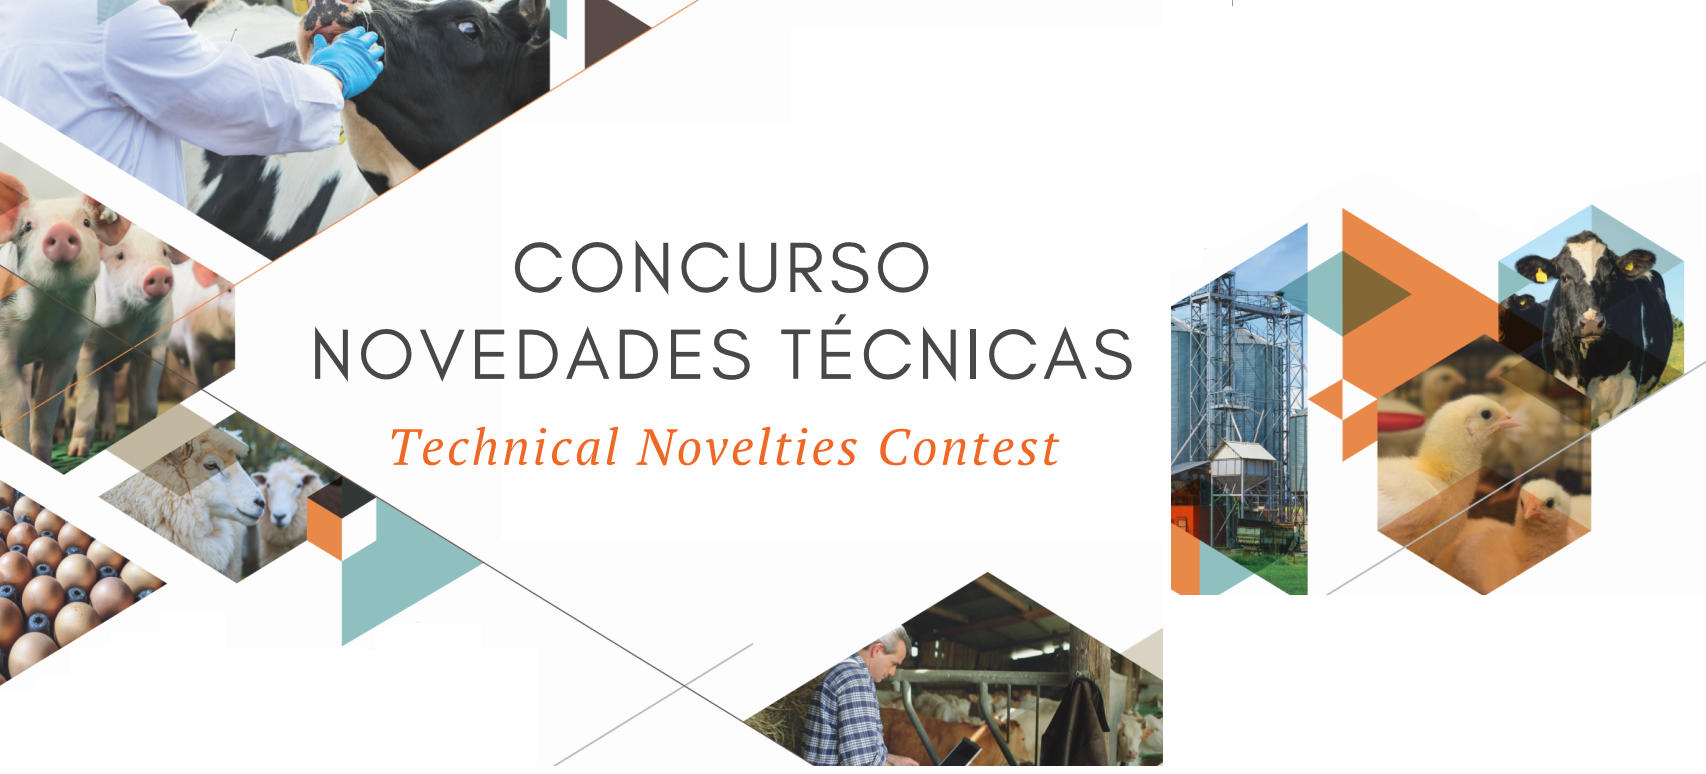 Technical Novelties Contest